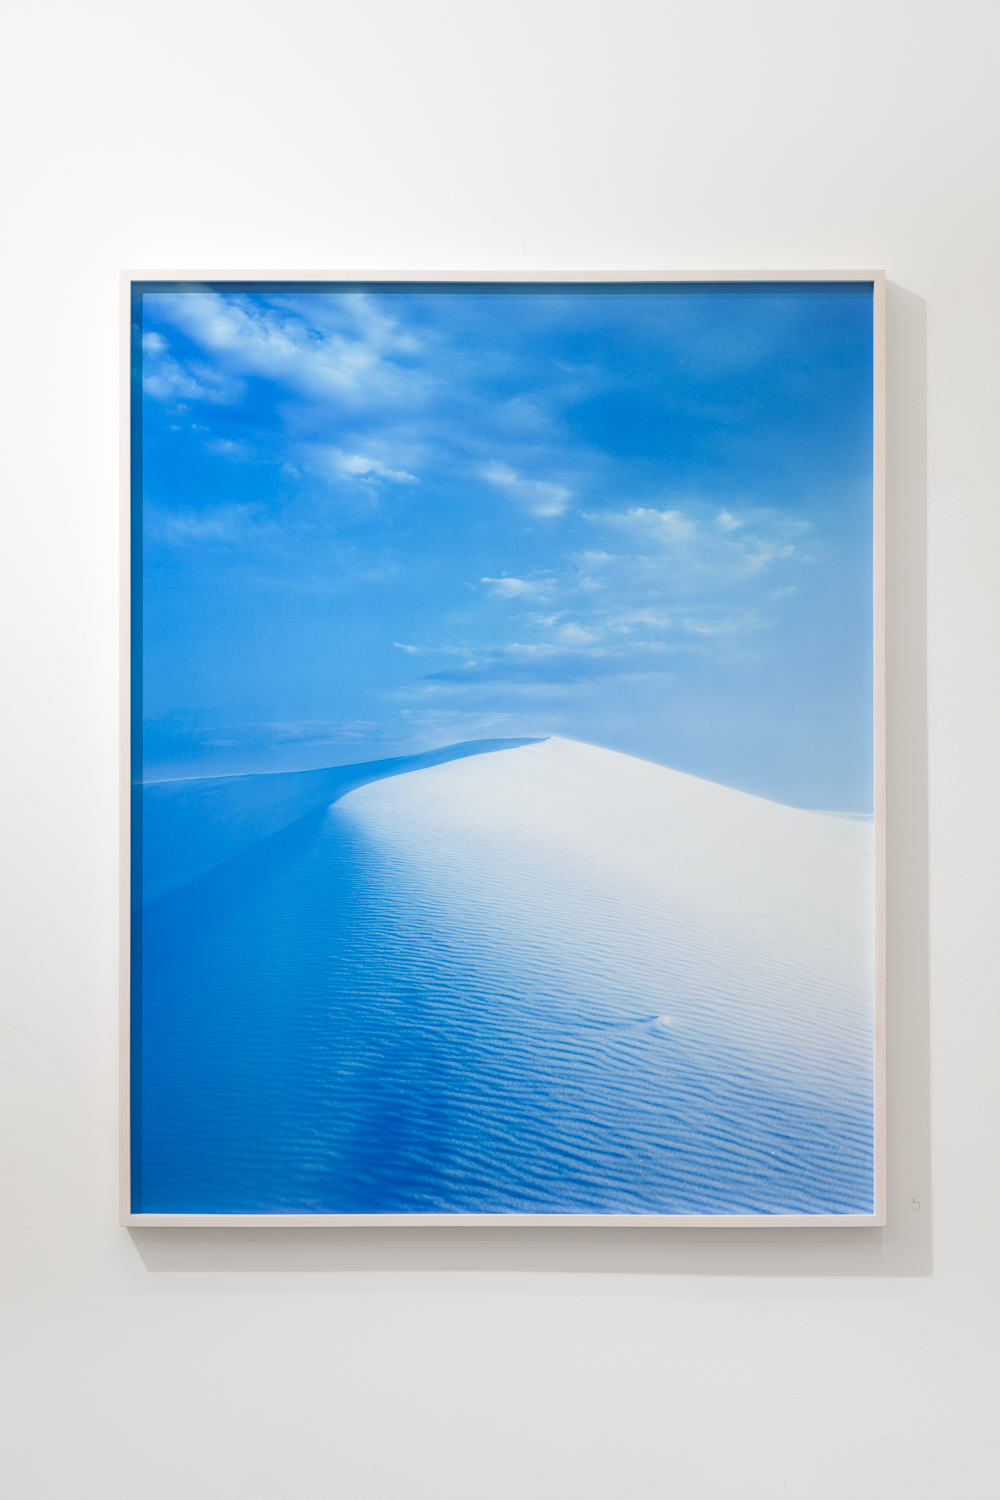 David Benjamin Sherry, White Sands at Dusk, White Sands National Park, New Mexico, 2022, c-type print, framed